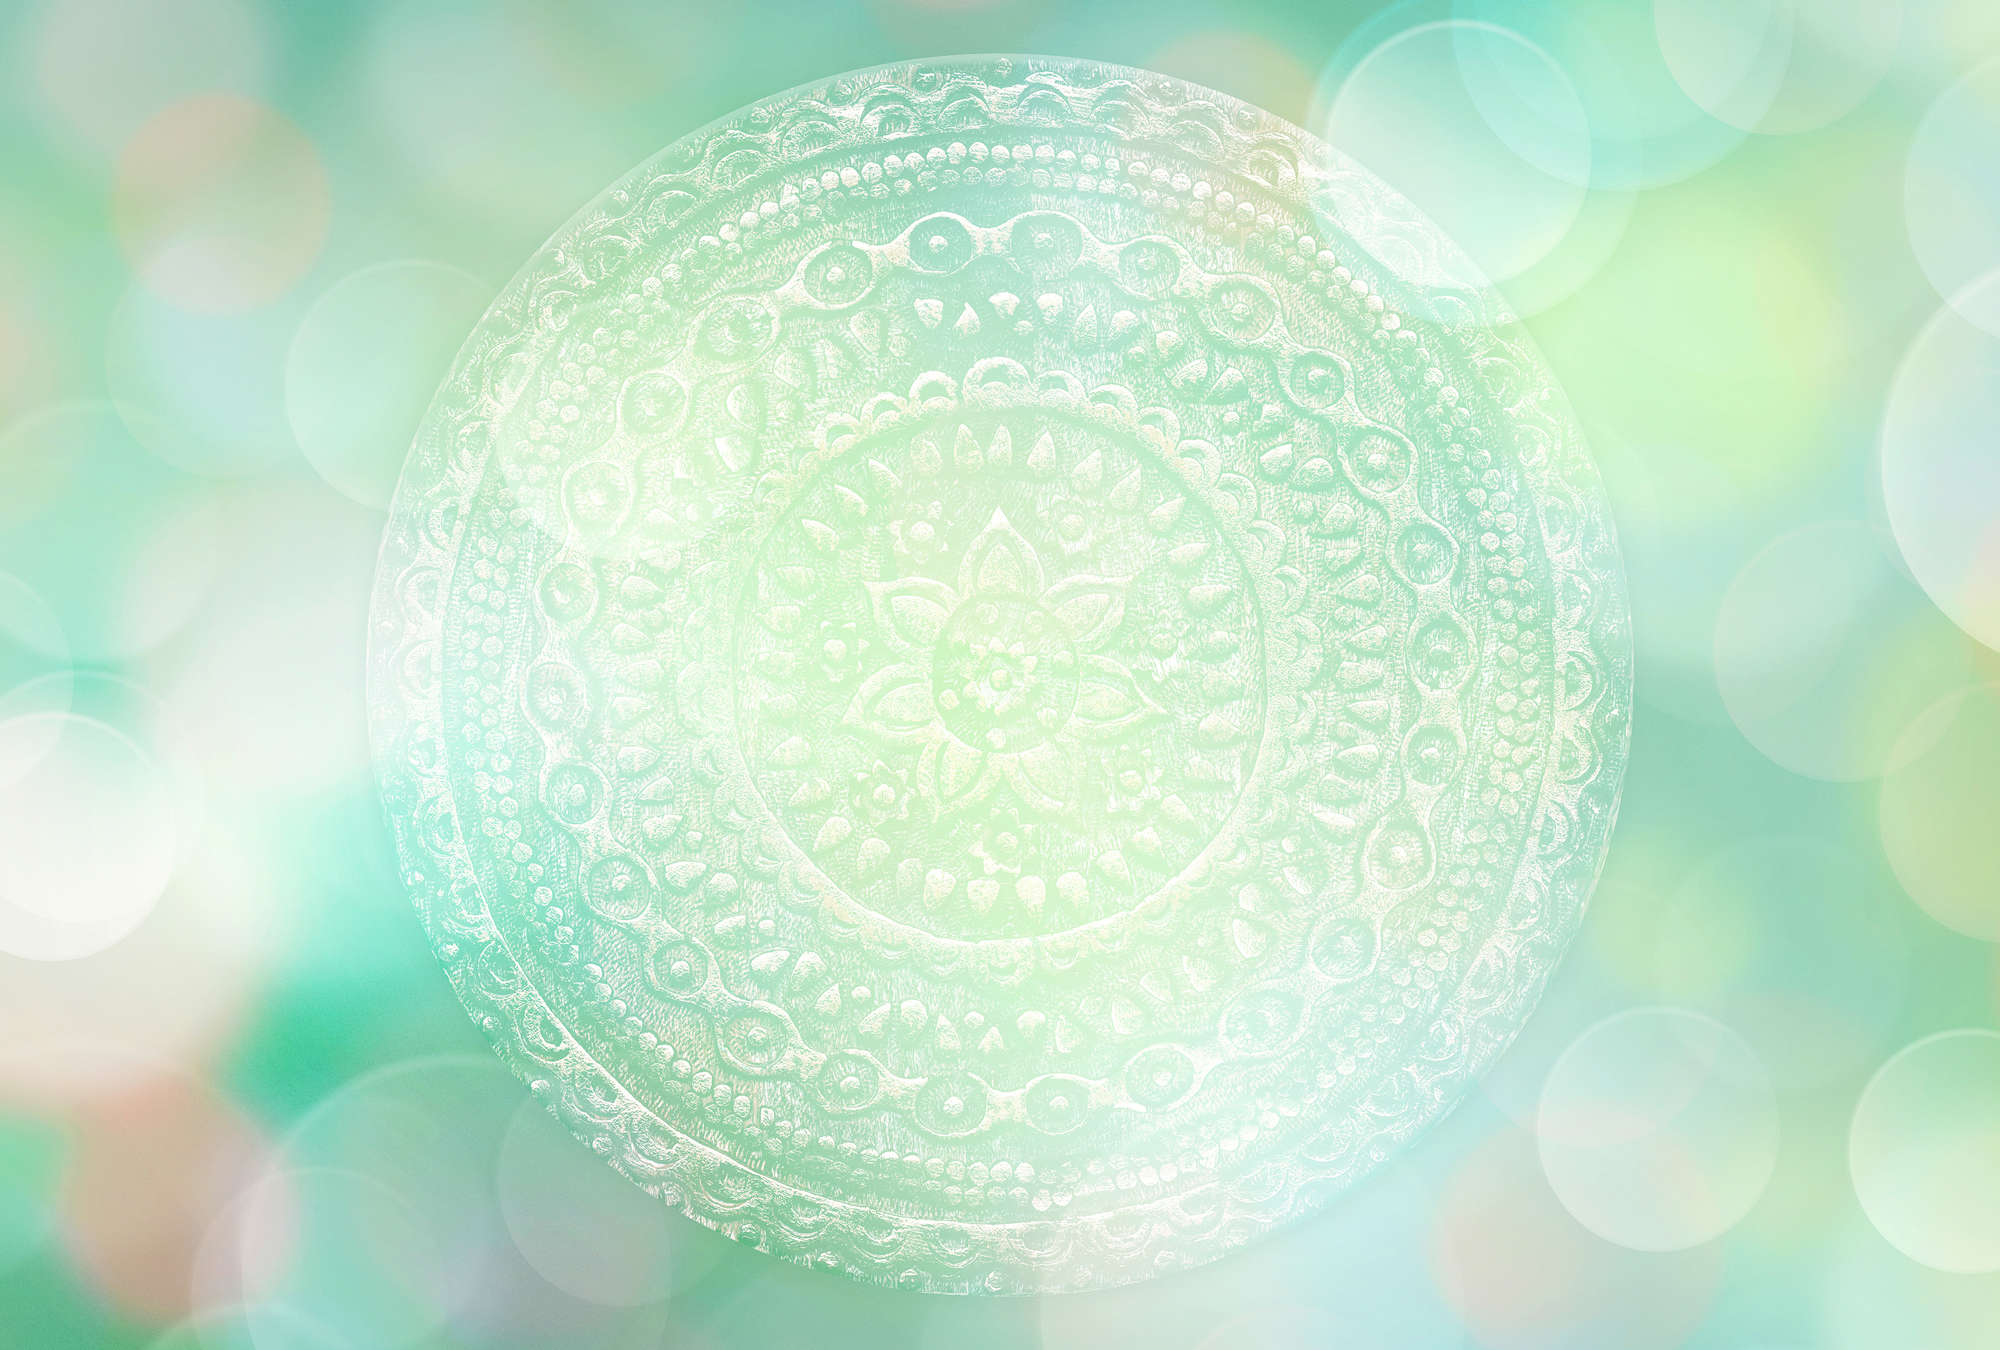             Boho Fototapete Türkis mit Mandala – Grün, Blau, Weiß
        